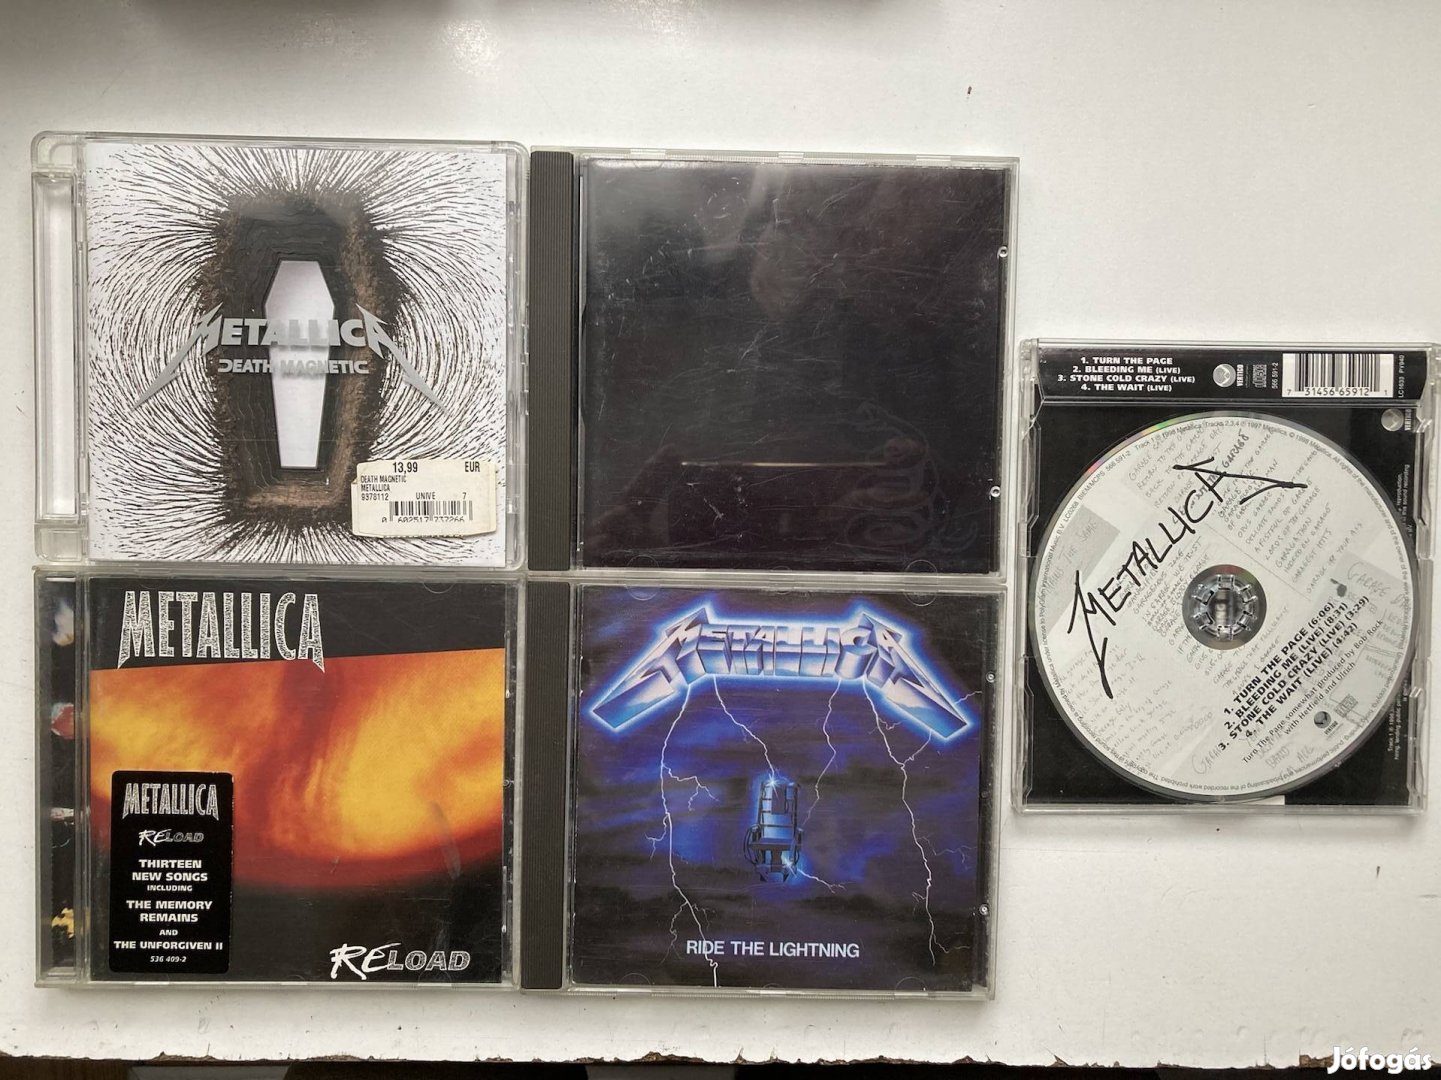 Metallica heavy speed metal CD albumok egyben 